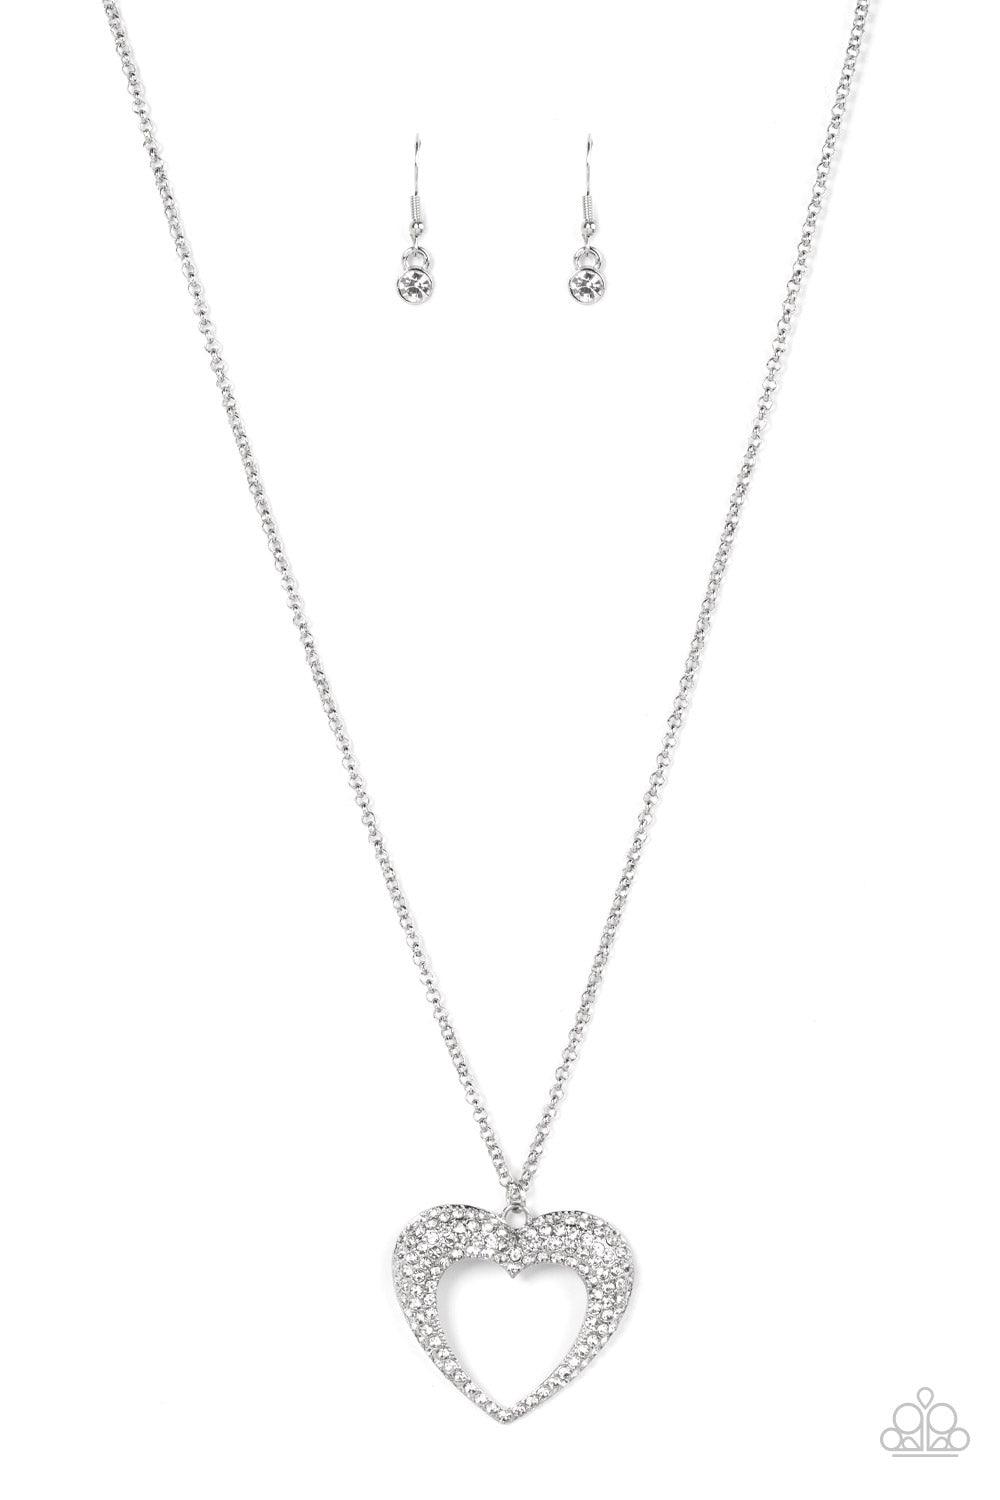 Cupid Charisma White Rhinestone Heart Necklace - Paparazzi Accessories- lightbox - CarasShop.com - $5 Jewelry by Cara Jewels